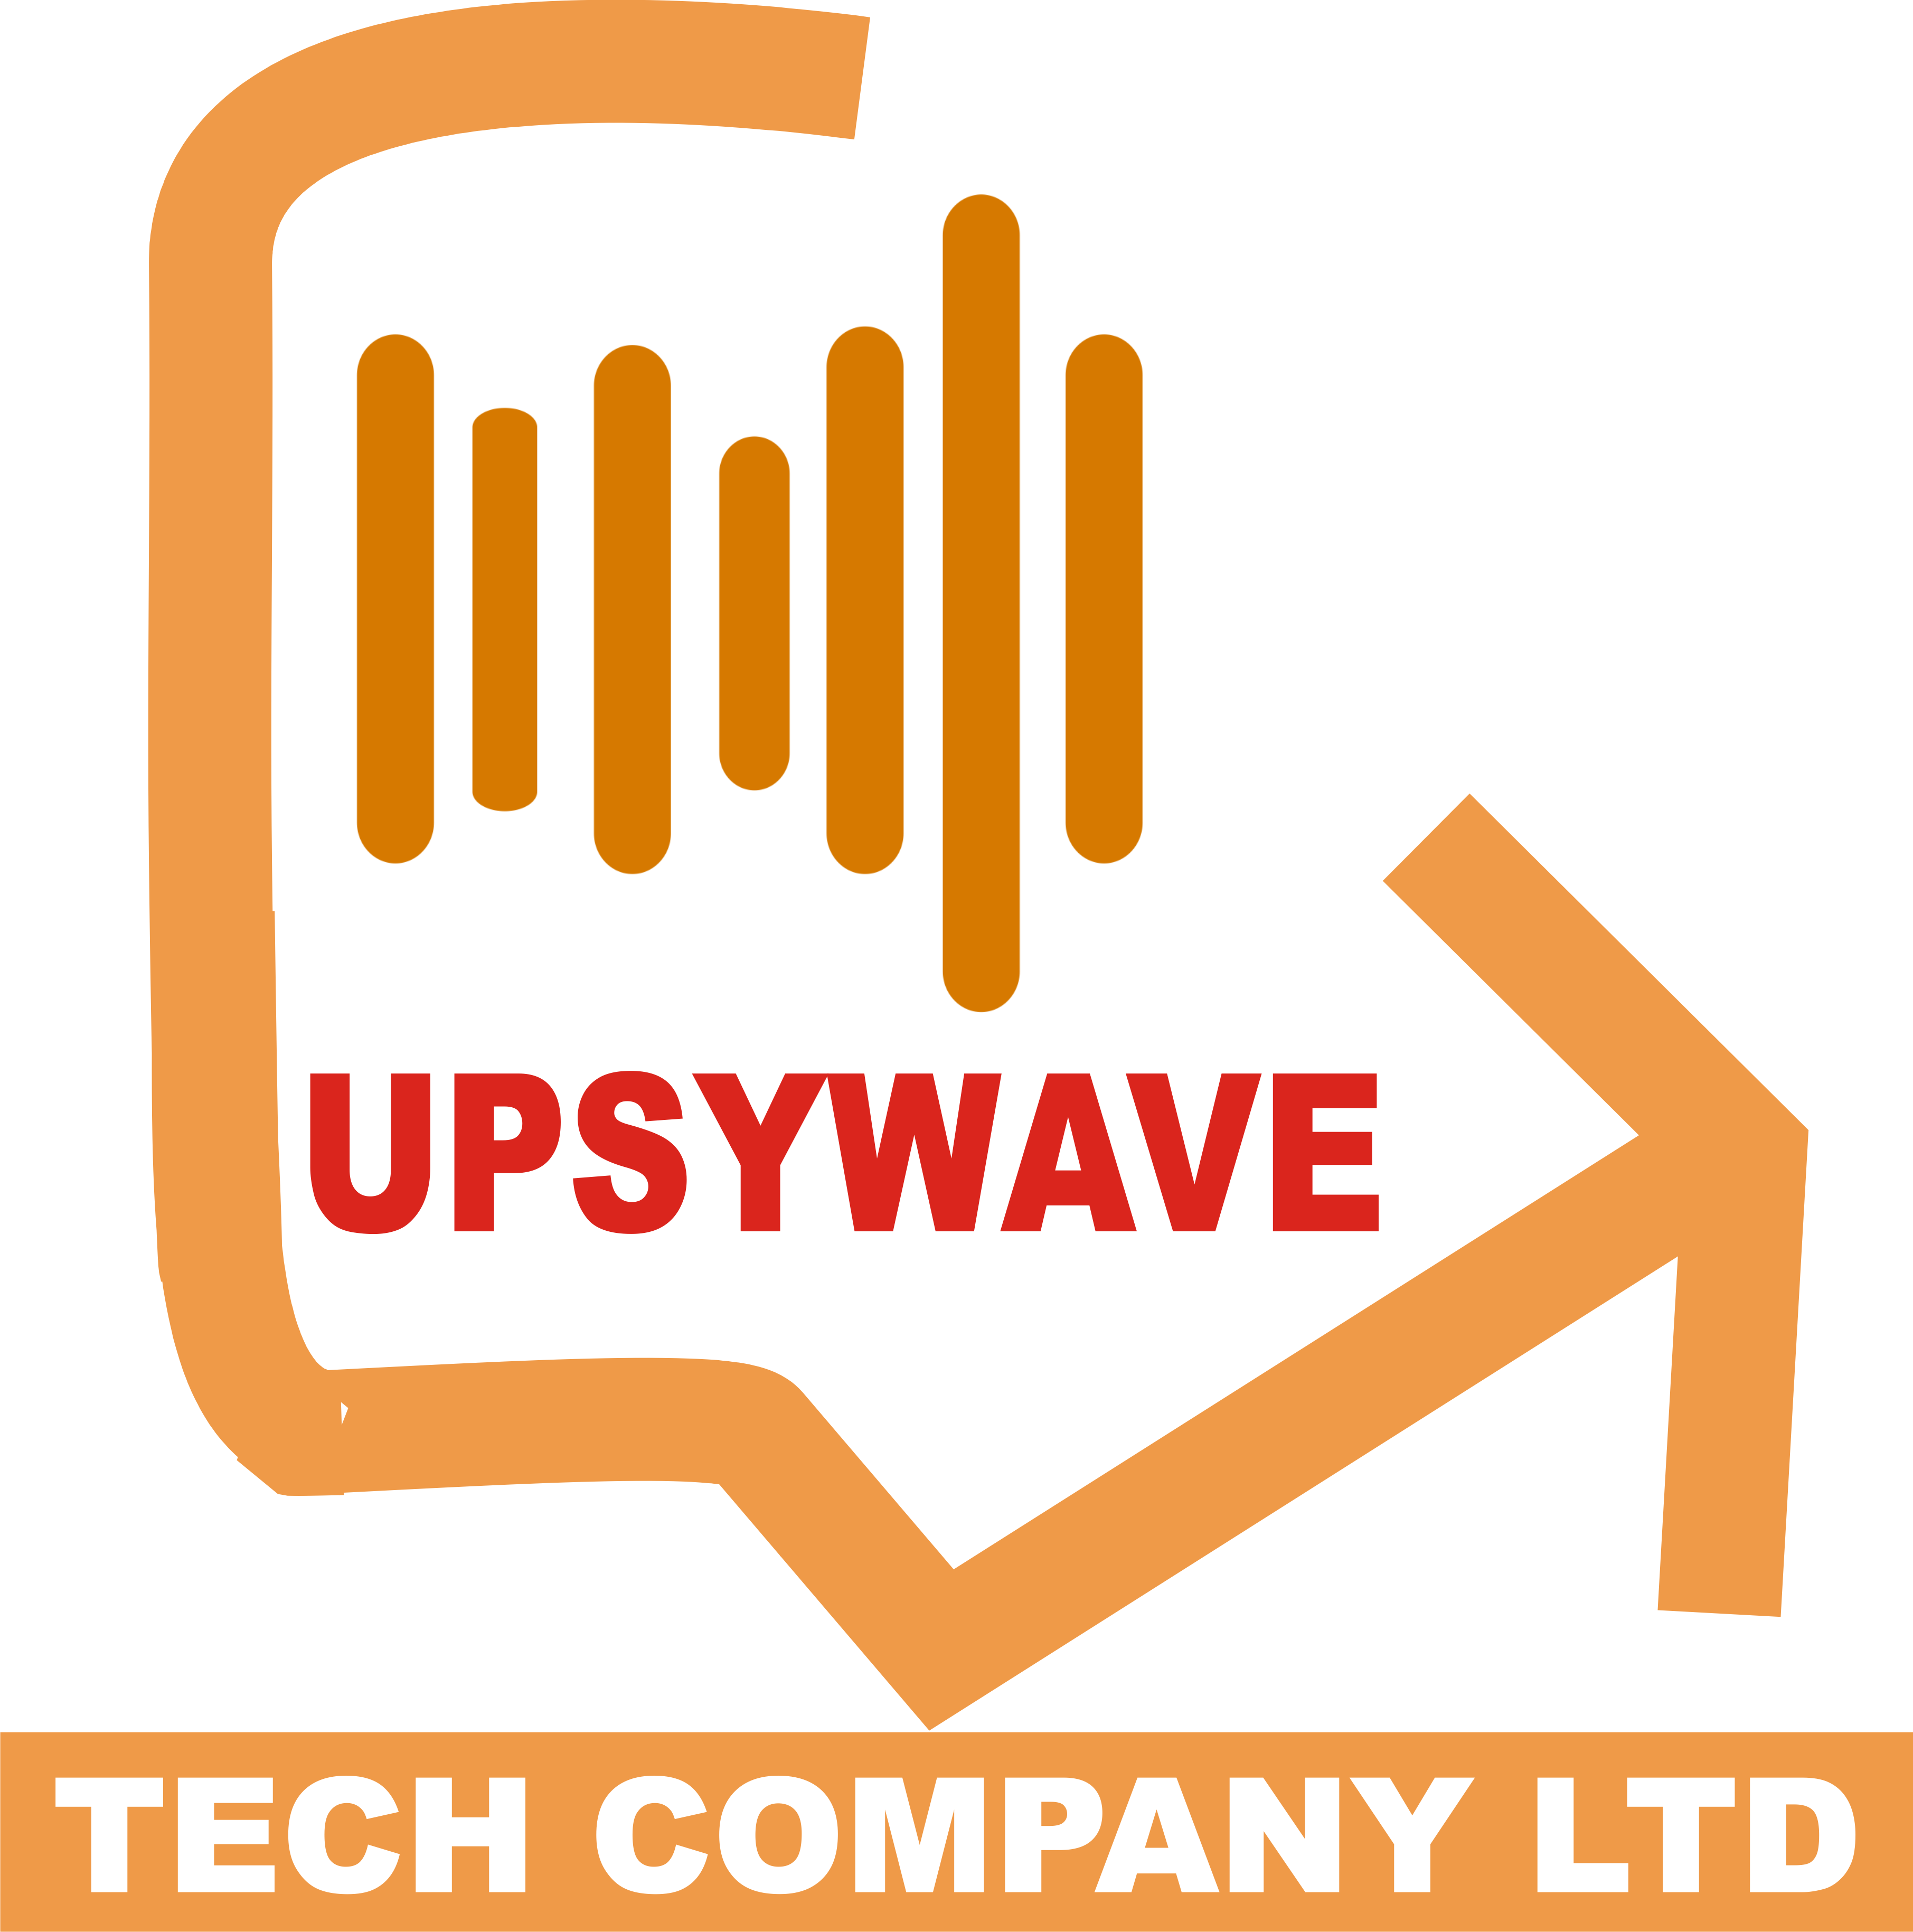 Upsywave Tech Company Ltd